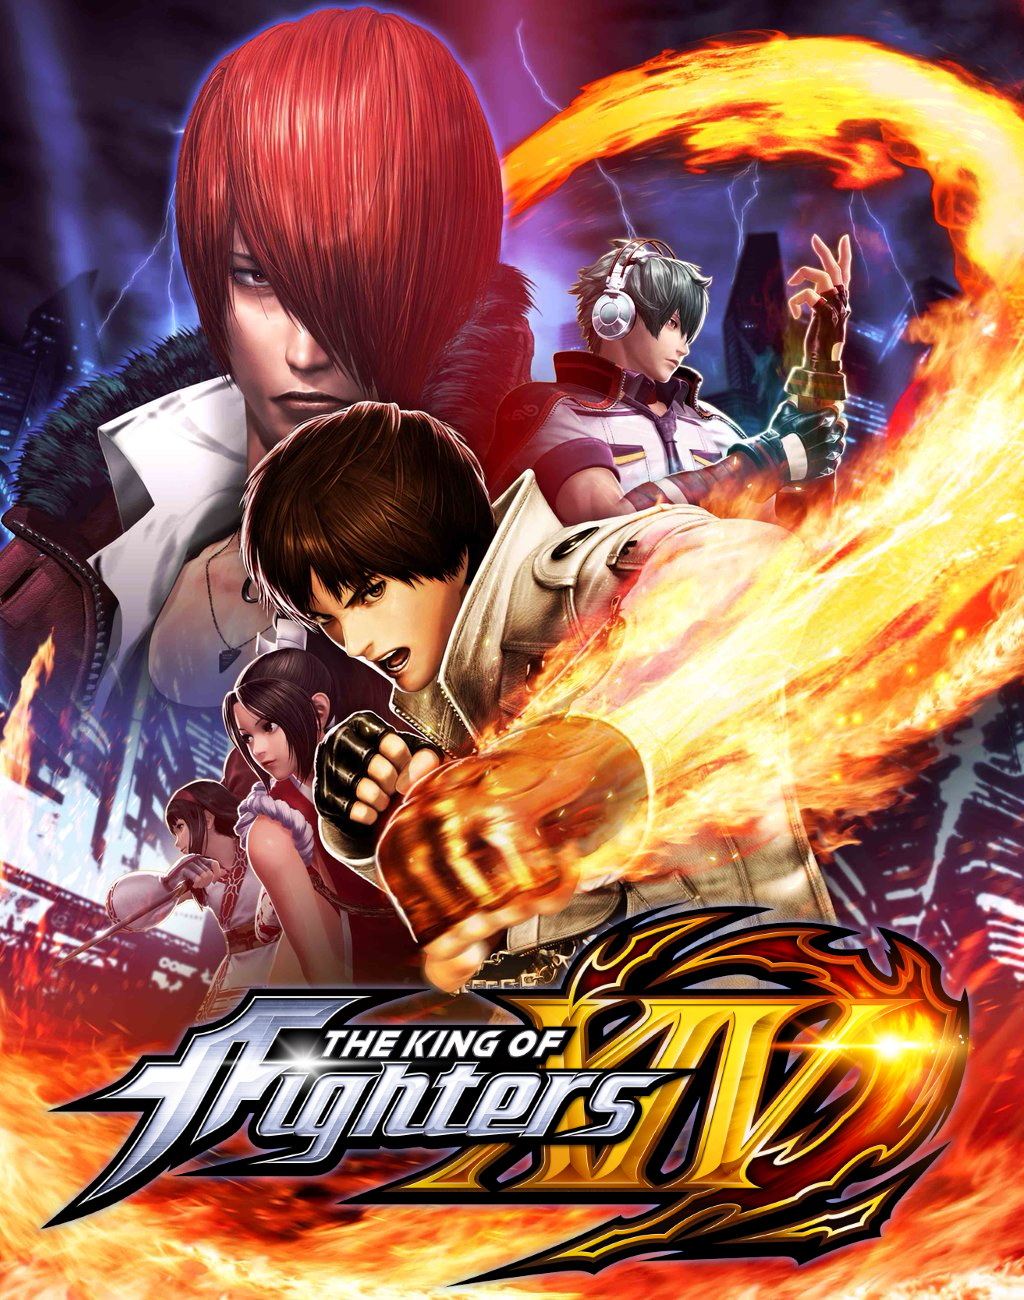 Análise: The King of Fighters XIV (PS4) inova sem fugir das raízes